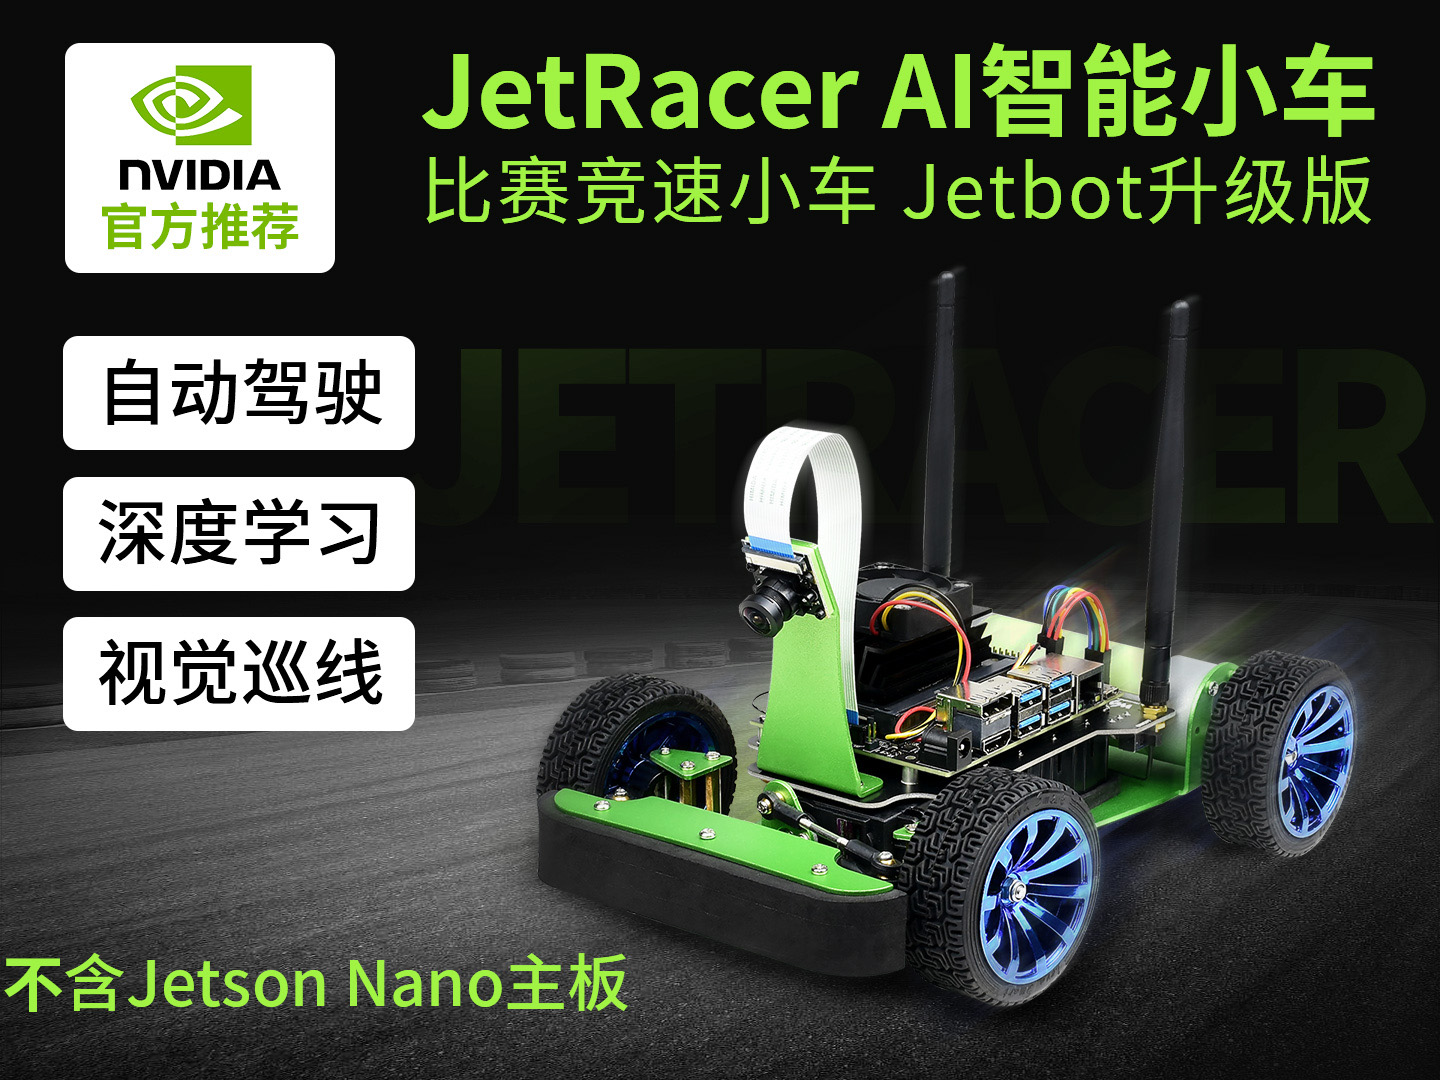 JetRacer人工智能小车 AI视觉机器人 JetBot升级版赛车 自动驾驶 深度学习 配件包(不含Jetson Nano)